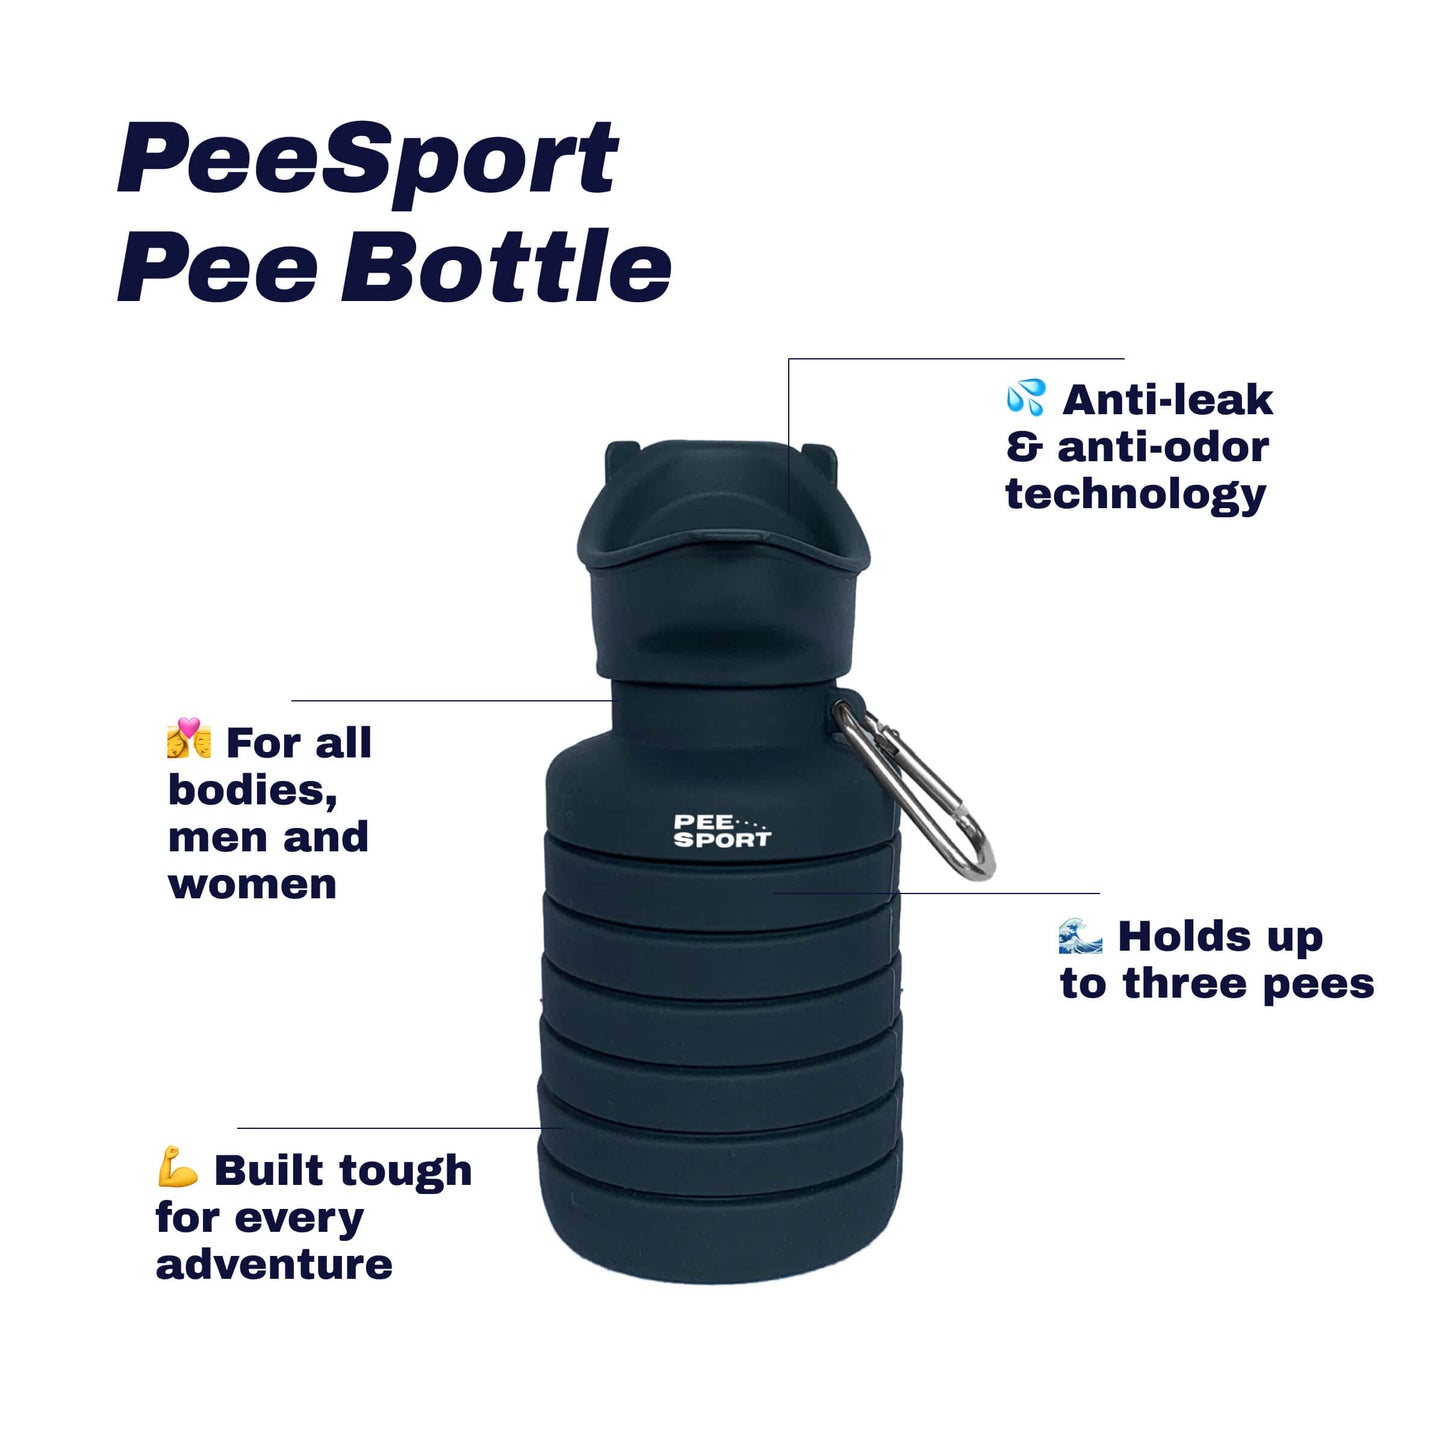 PeeSport Pee Bottle